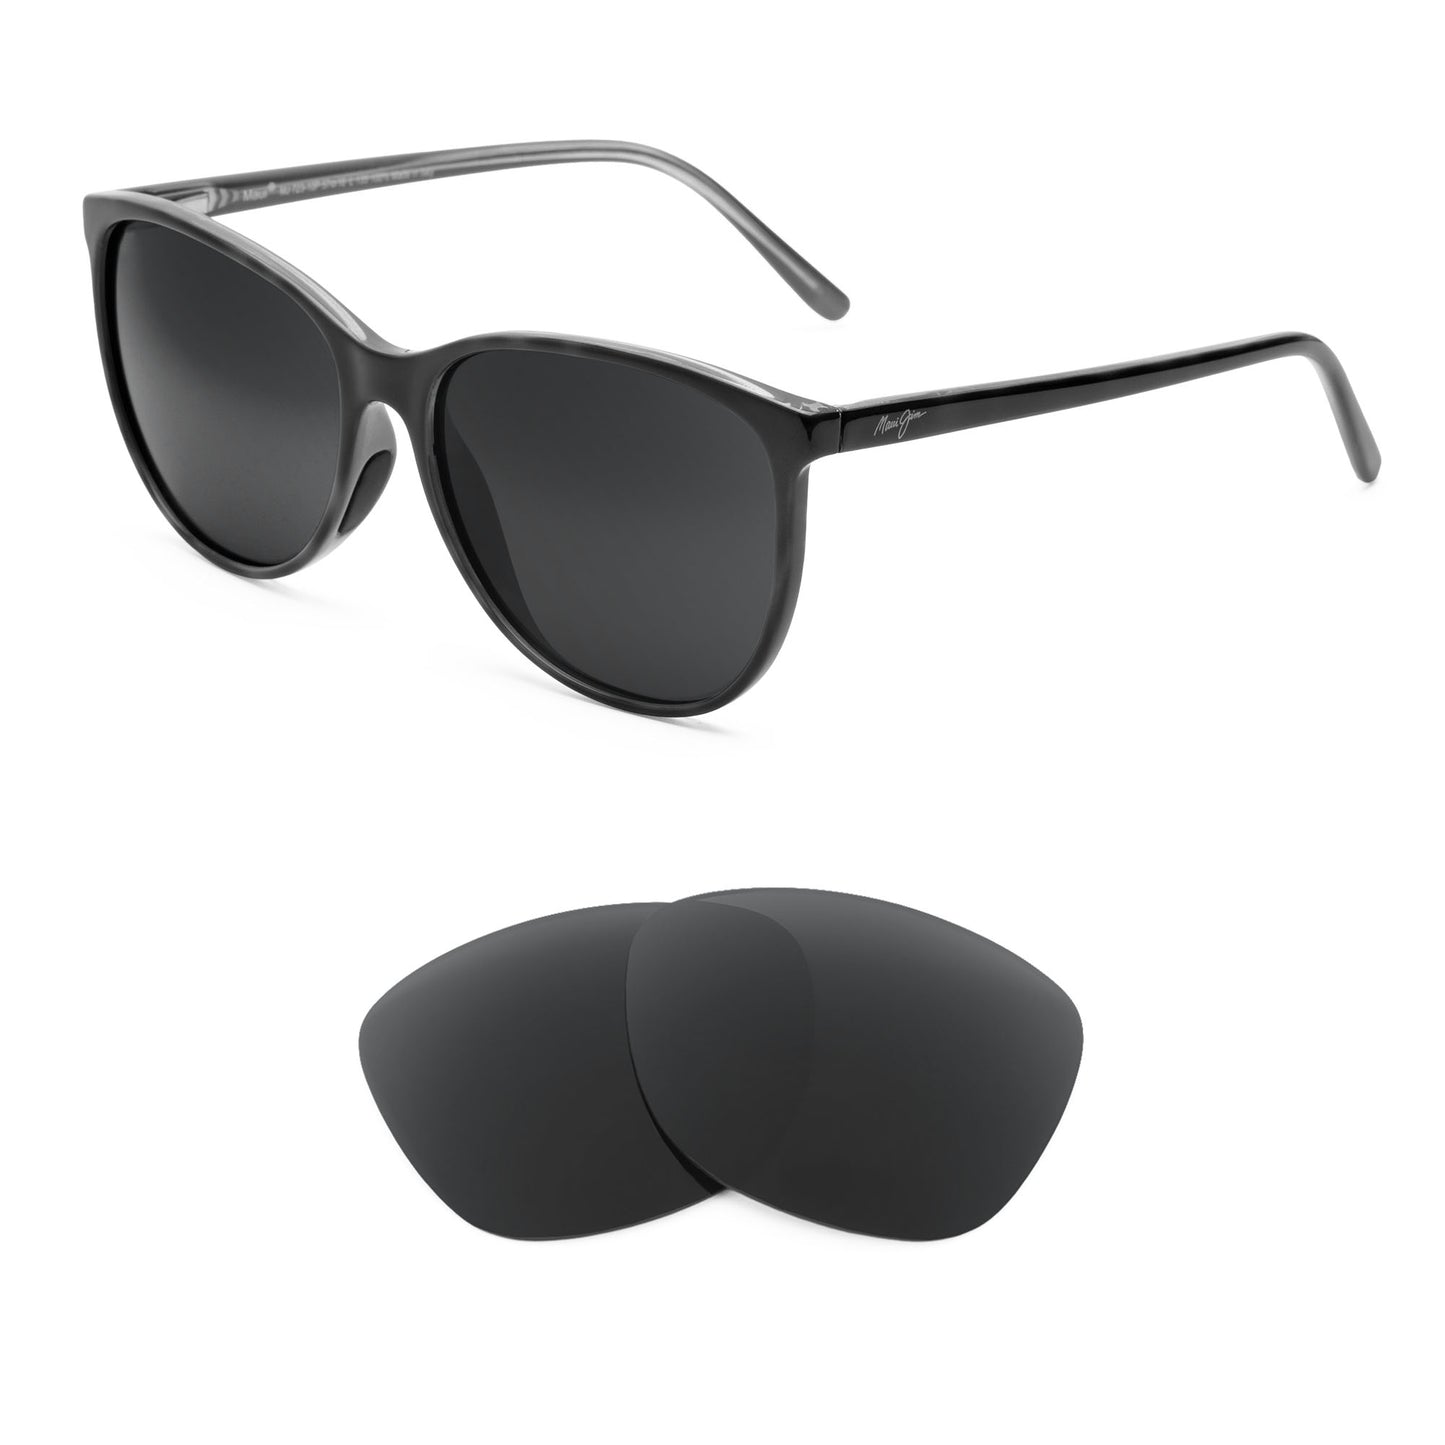 Maui Jim Ocean sunglasses with replacement lenses